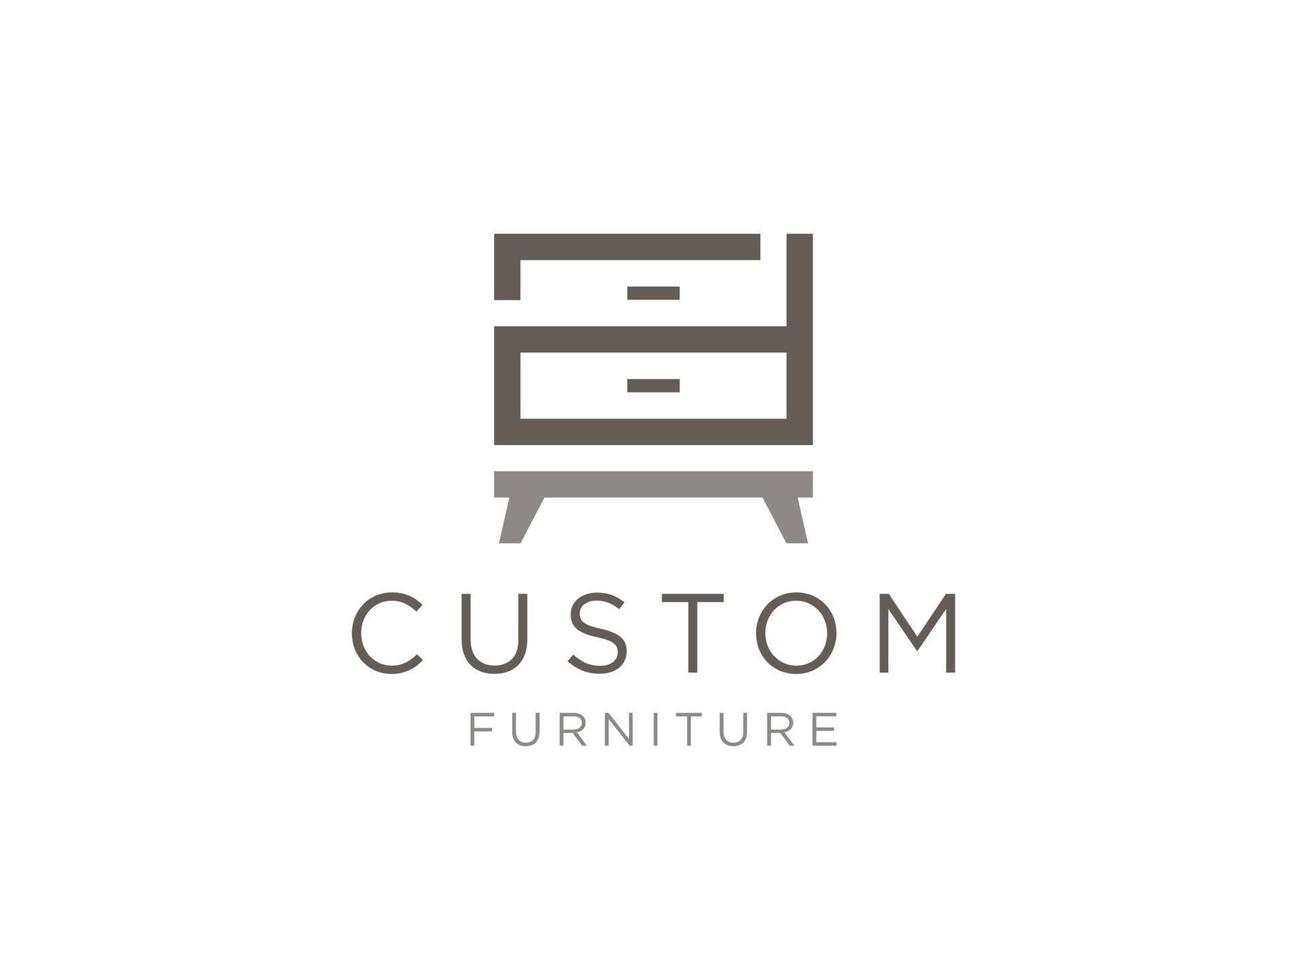 Letter D with wooden furniture concept logo design inspiration vector